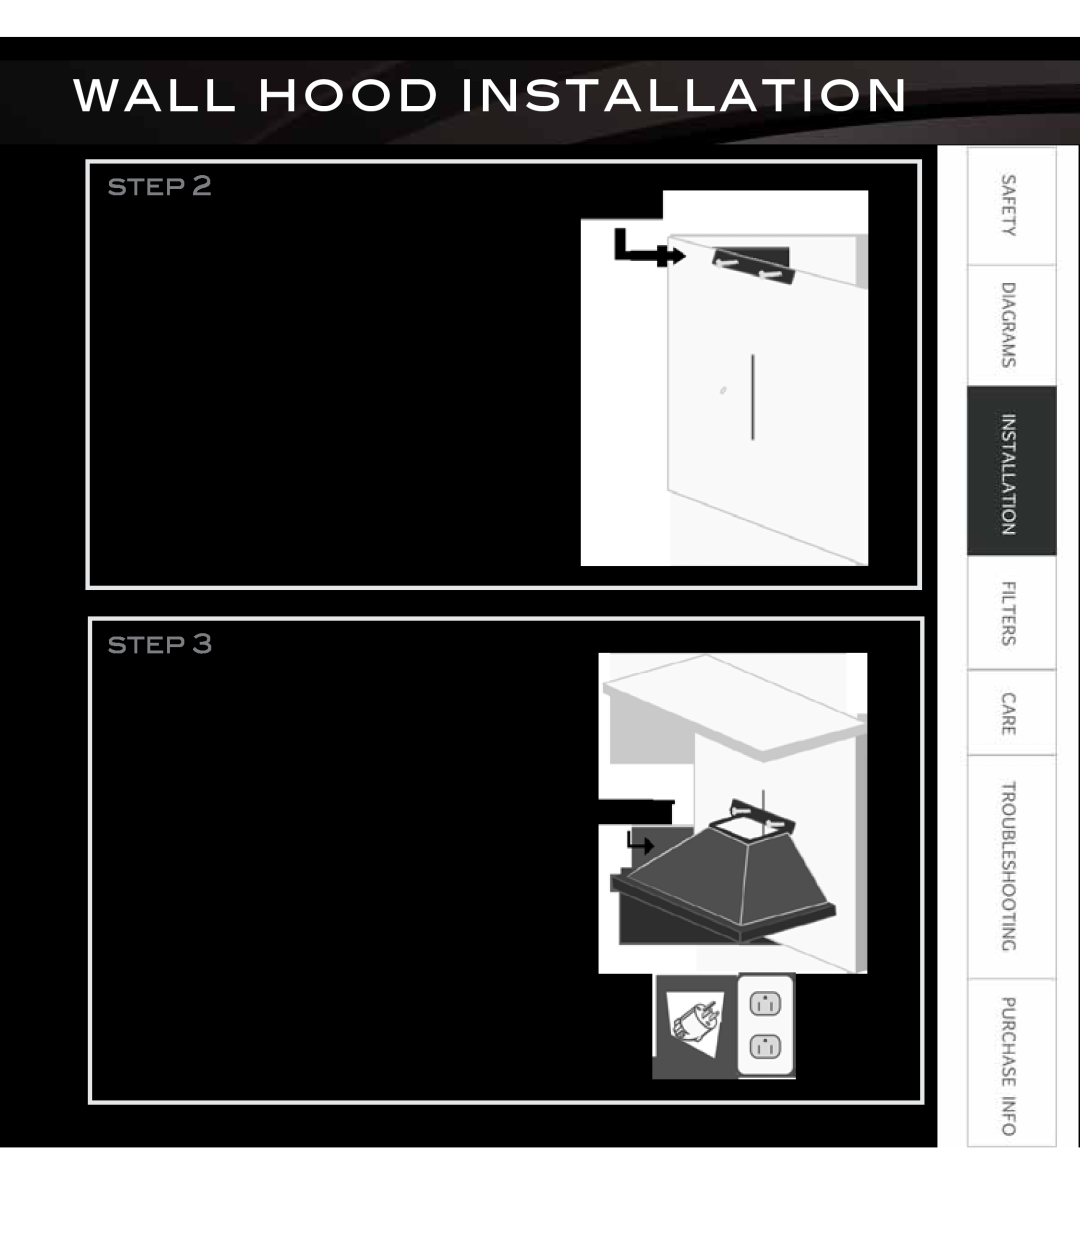 Proline PLFI543, PLFI750 Install ceiling bracket, Hang hood and connect, Wall Hood Installation, Proline Range Hoods 